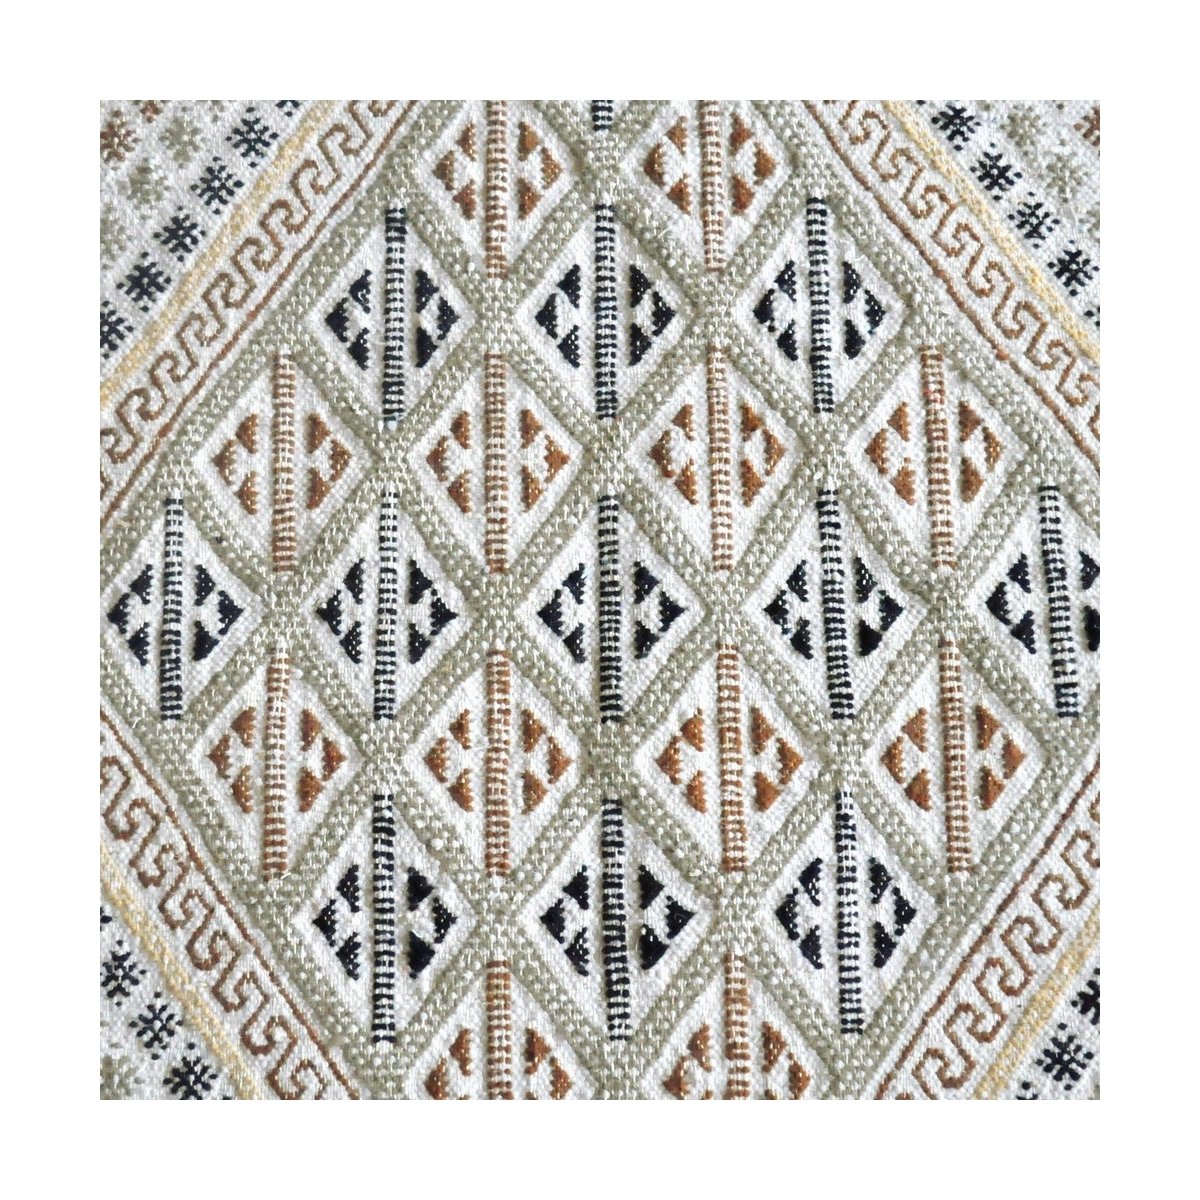 Berber carpet Rug Margoum Khaznadar 115x195 White (Handmade, Wool, Tunisia) Tunisian margoum rug from the city of Kairouan. Rect